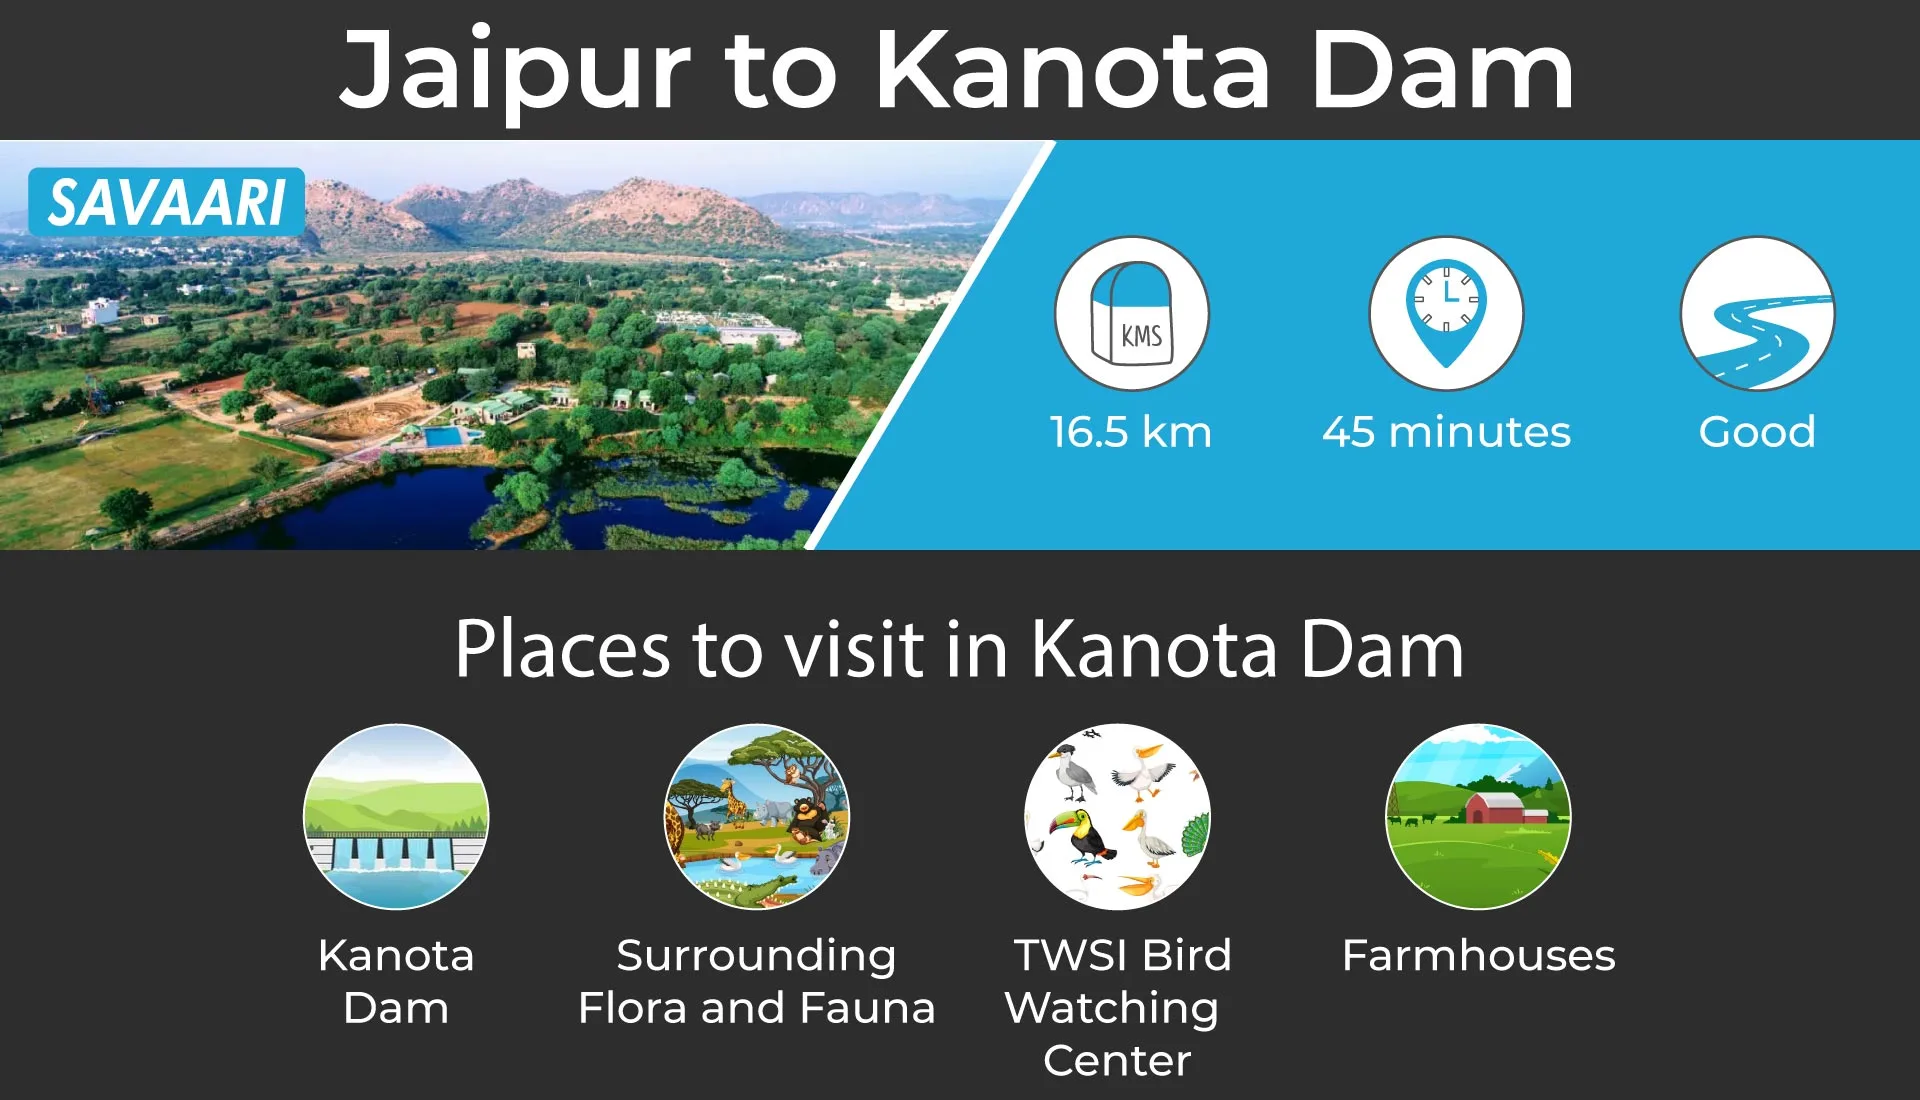 jaipur to Kanota Dam, a scenic road trip